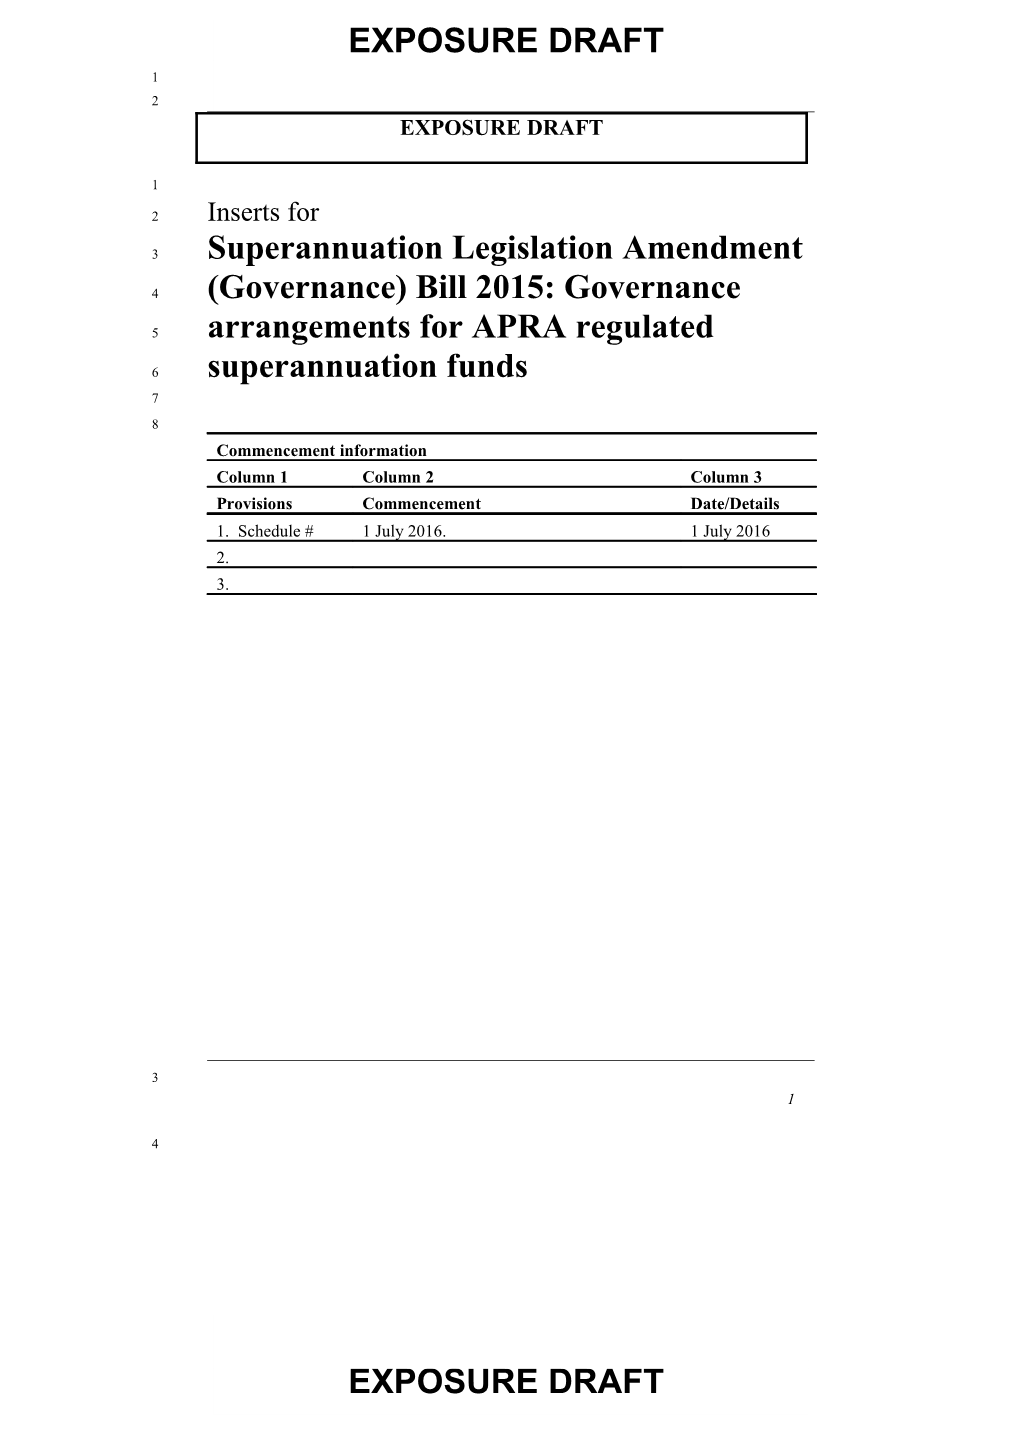 Exposure Draft: Superannuation Legislation Amendment (Governance) Bill 2015